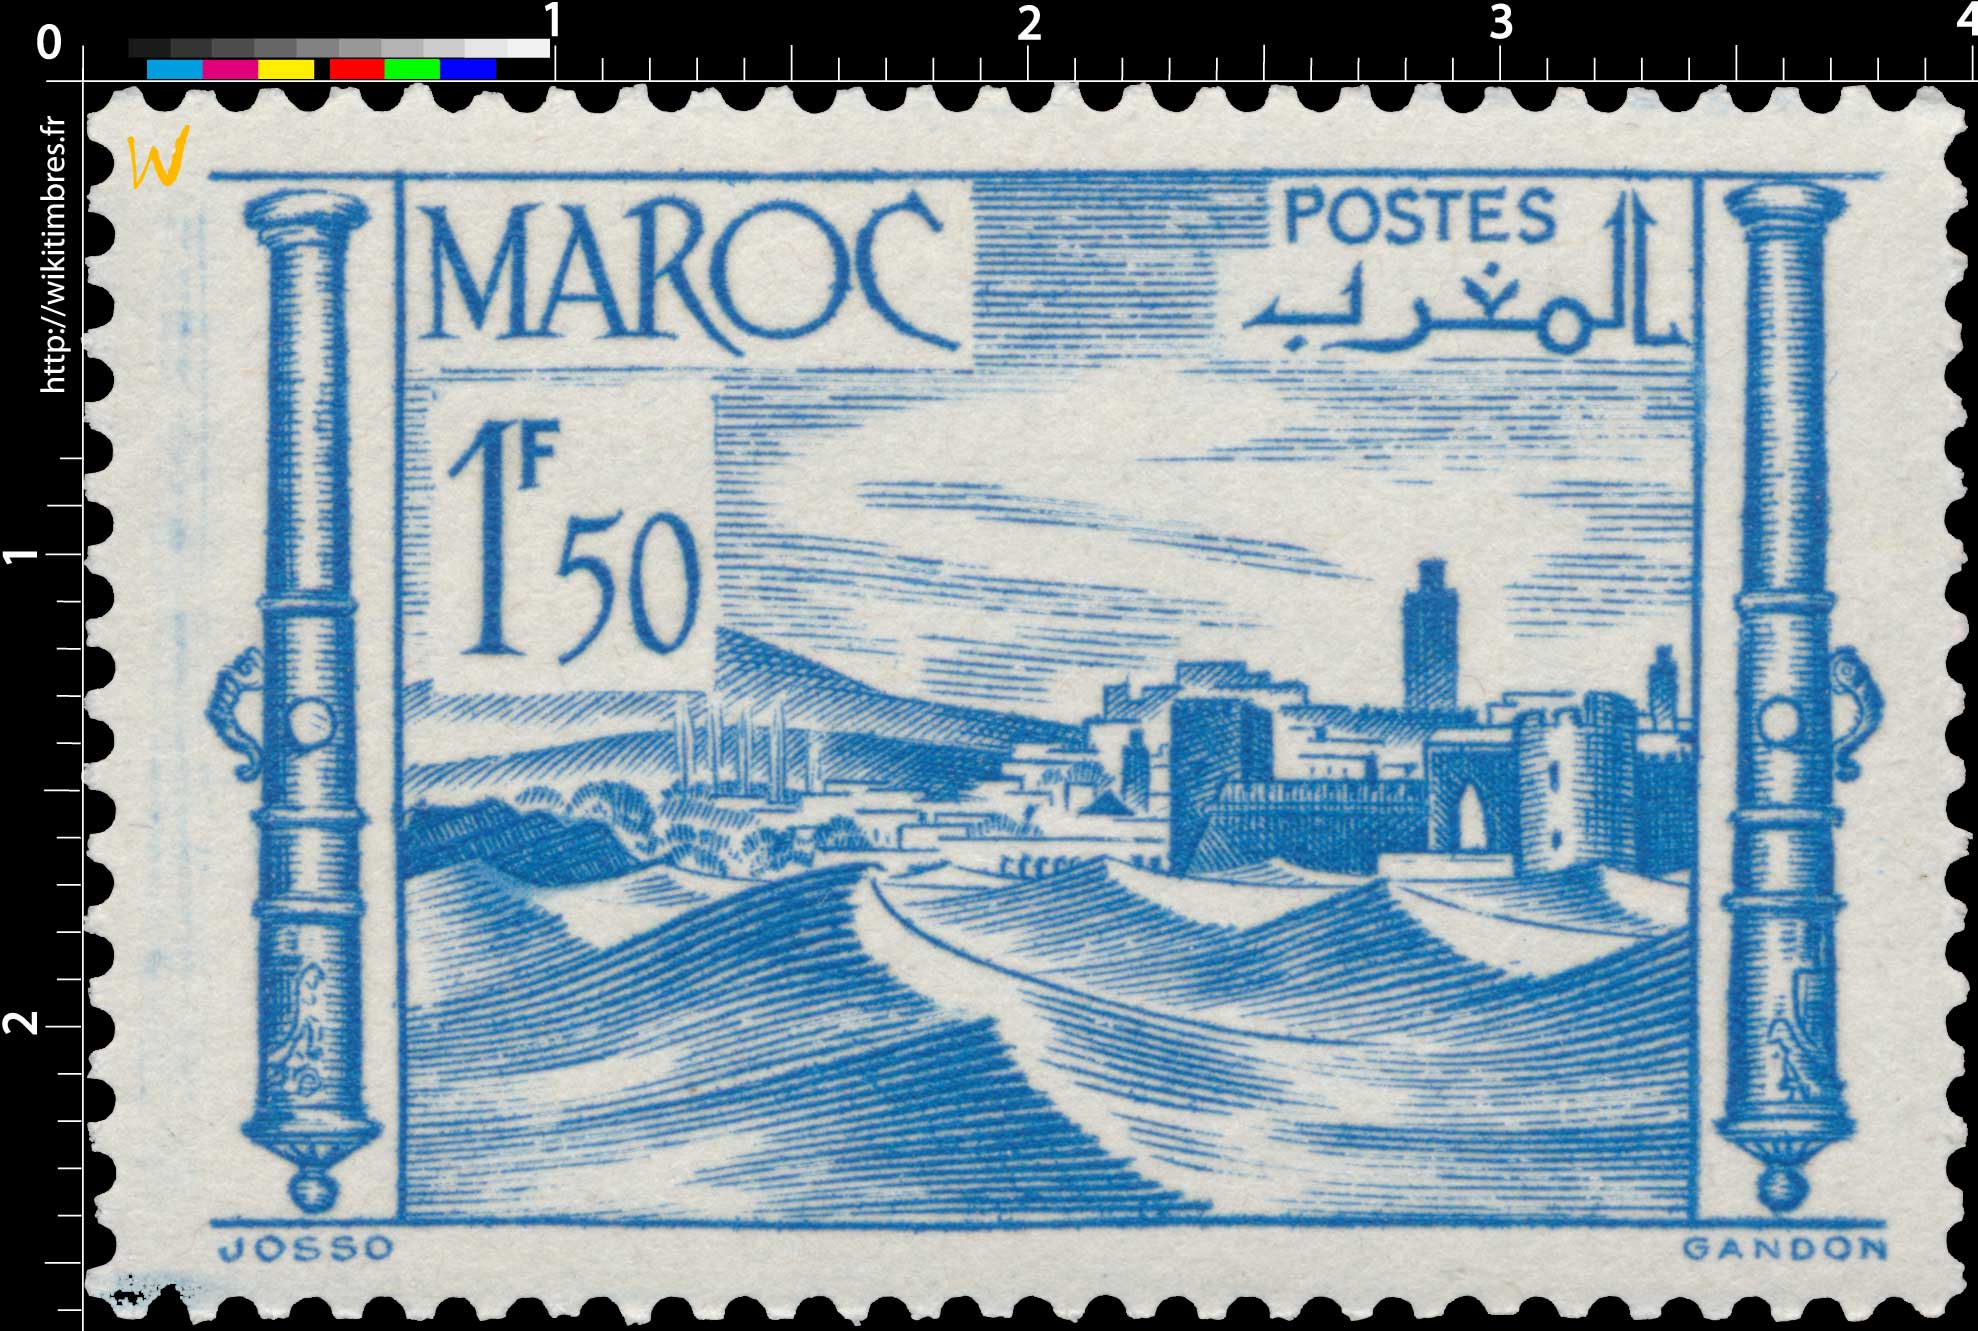 1947 Maroc - Forteresse